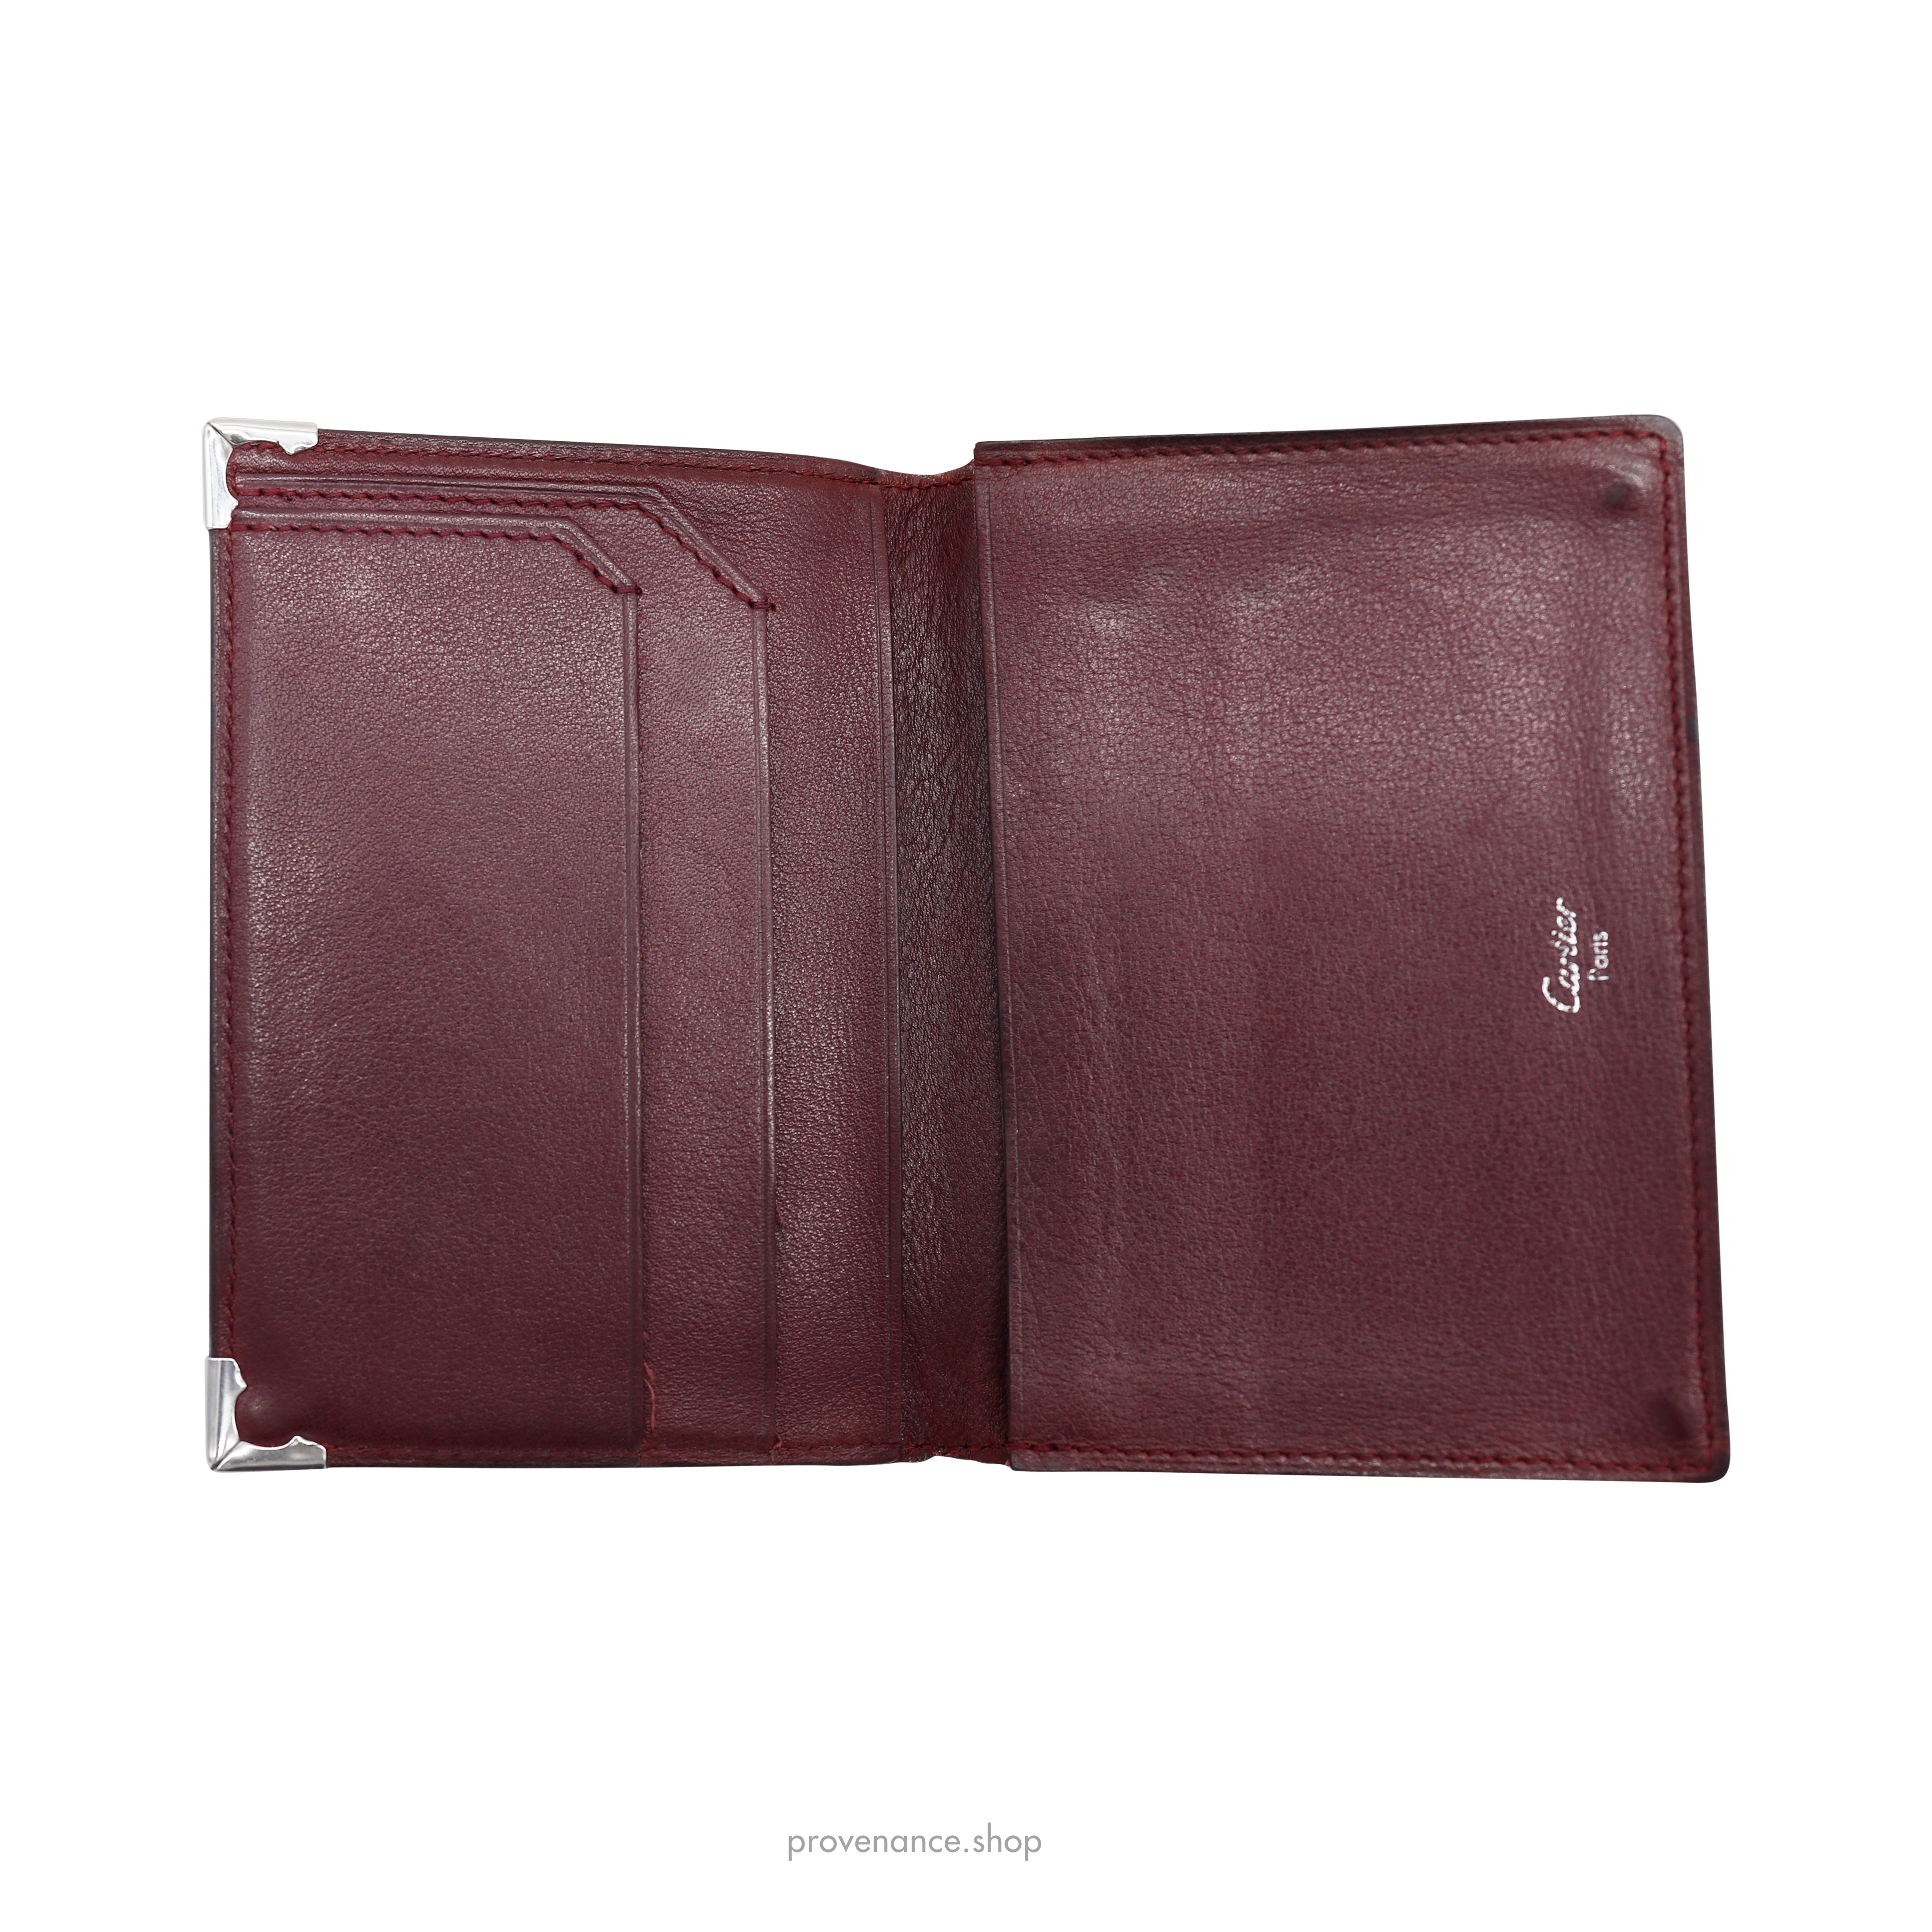 Pocket Organizer Wallet - Black & Burgundy Leather - 7